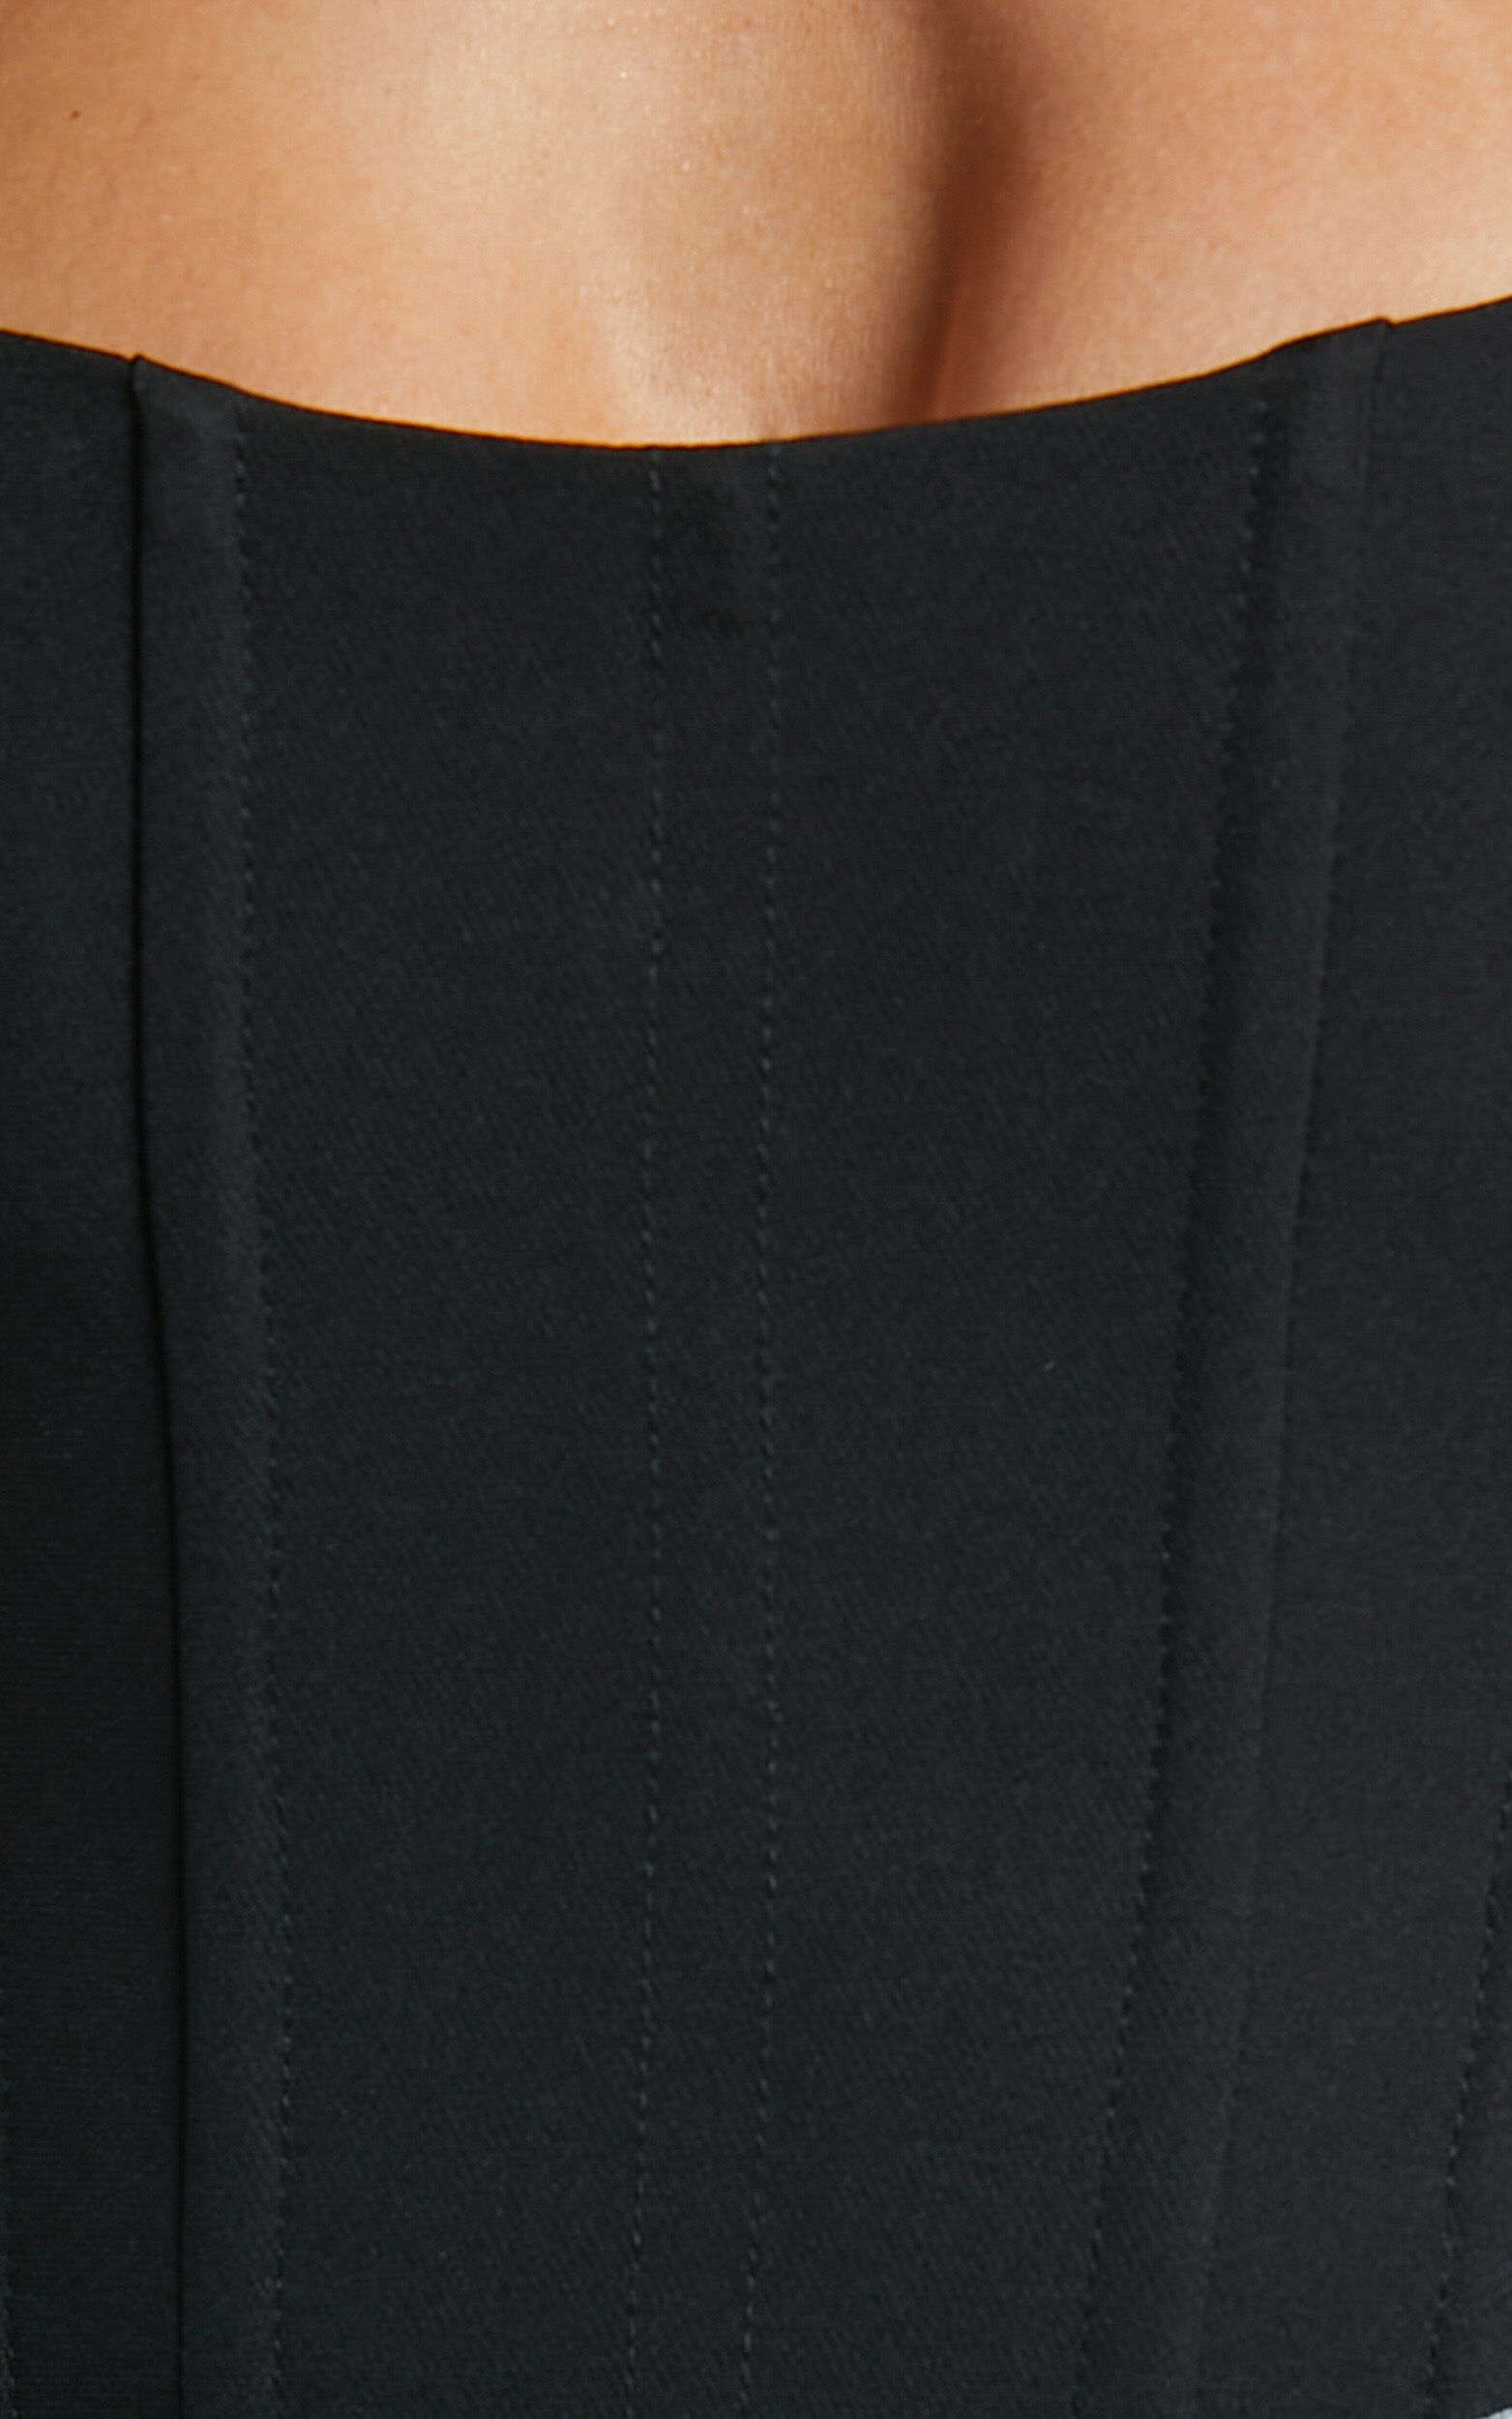 Katirina Top - Strapless Corset Bustier Top in Black